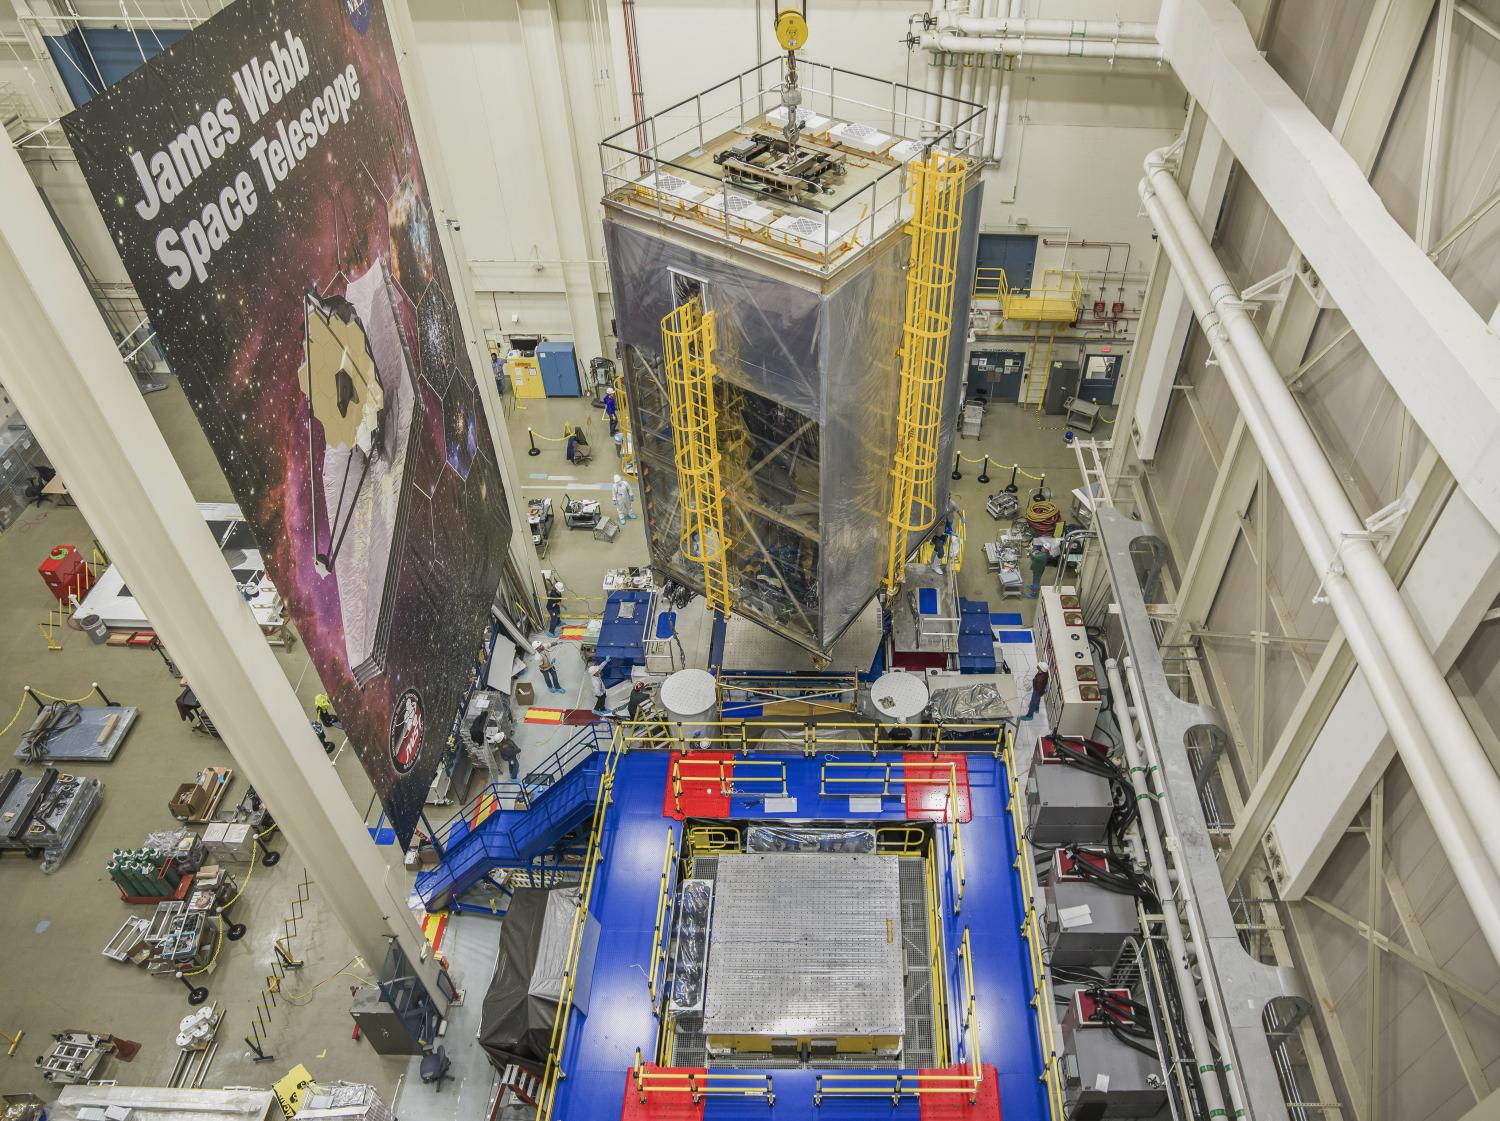 NASA restarts rigorous vibration testing on the James Webb Space Telescope